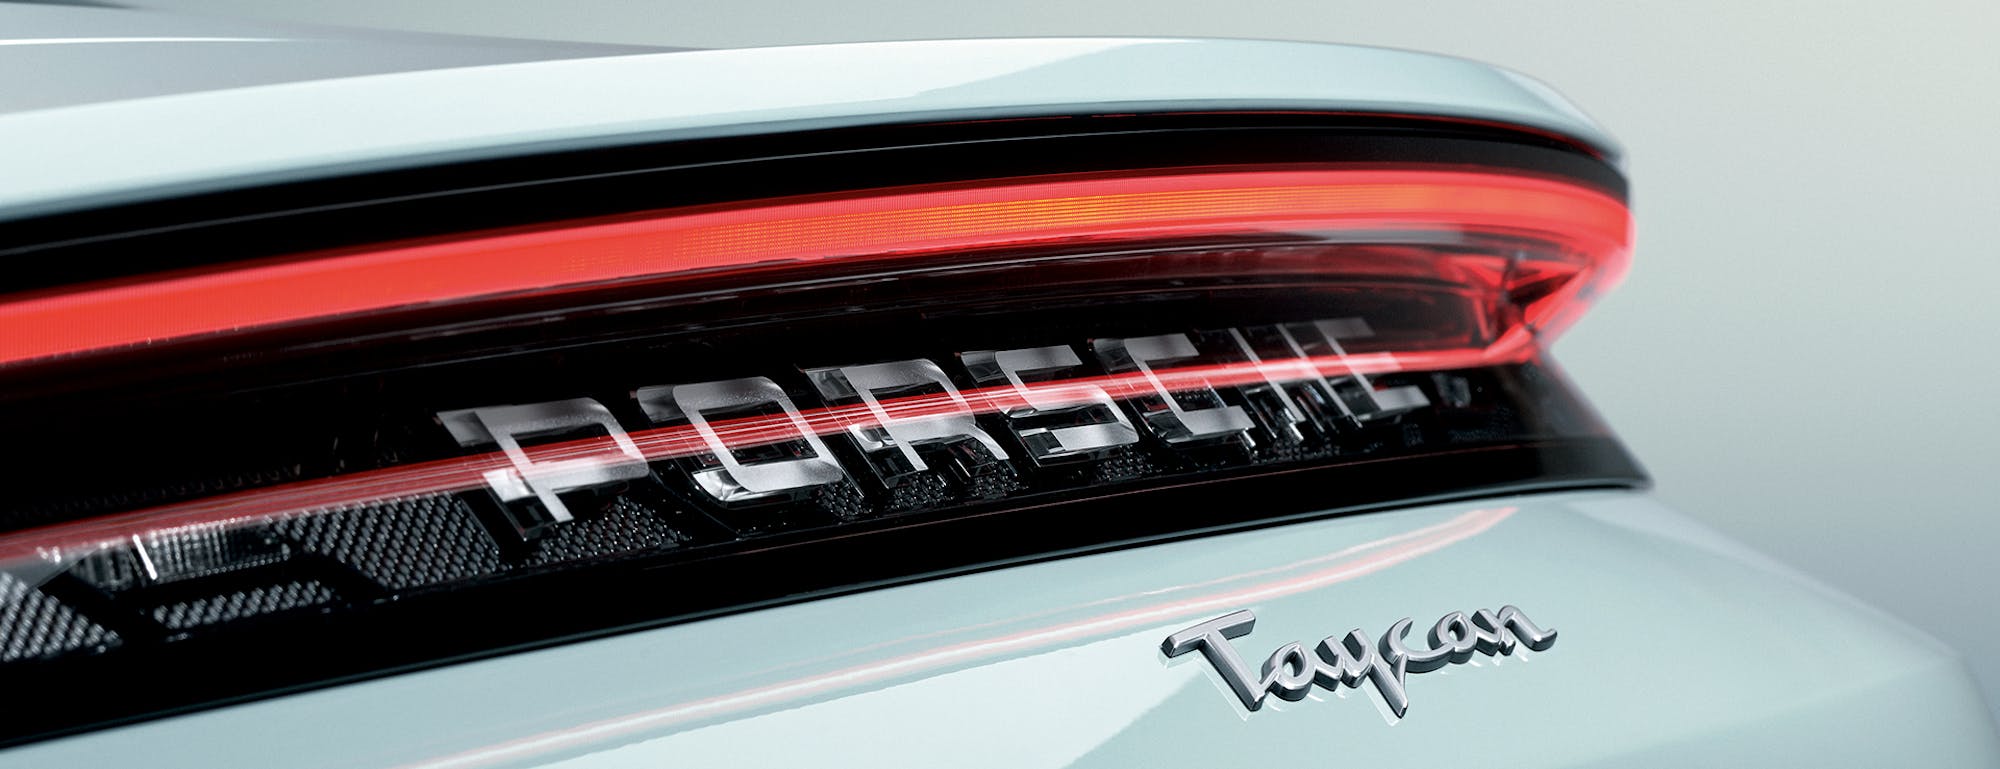 Porsche Taycan script nameplate on rear of car